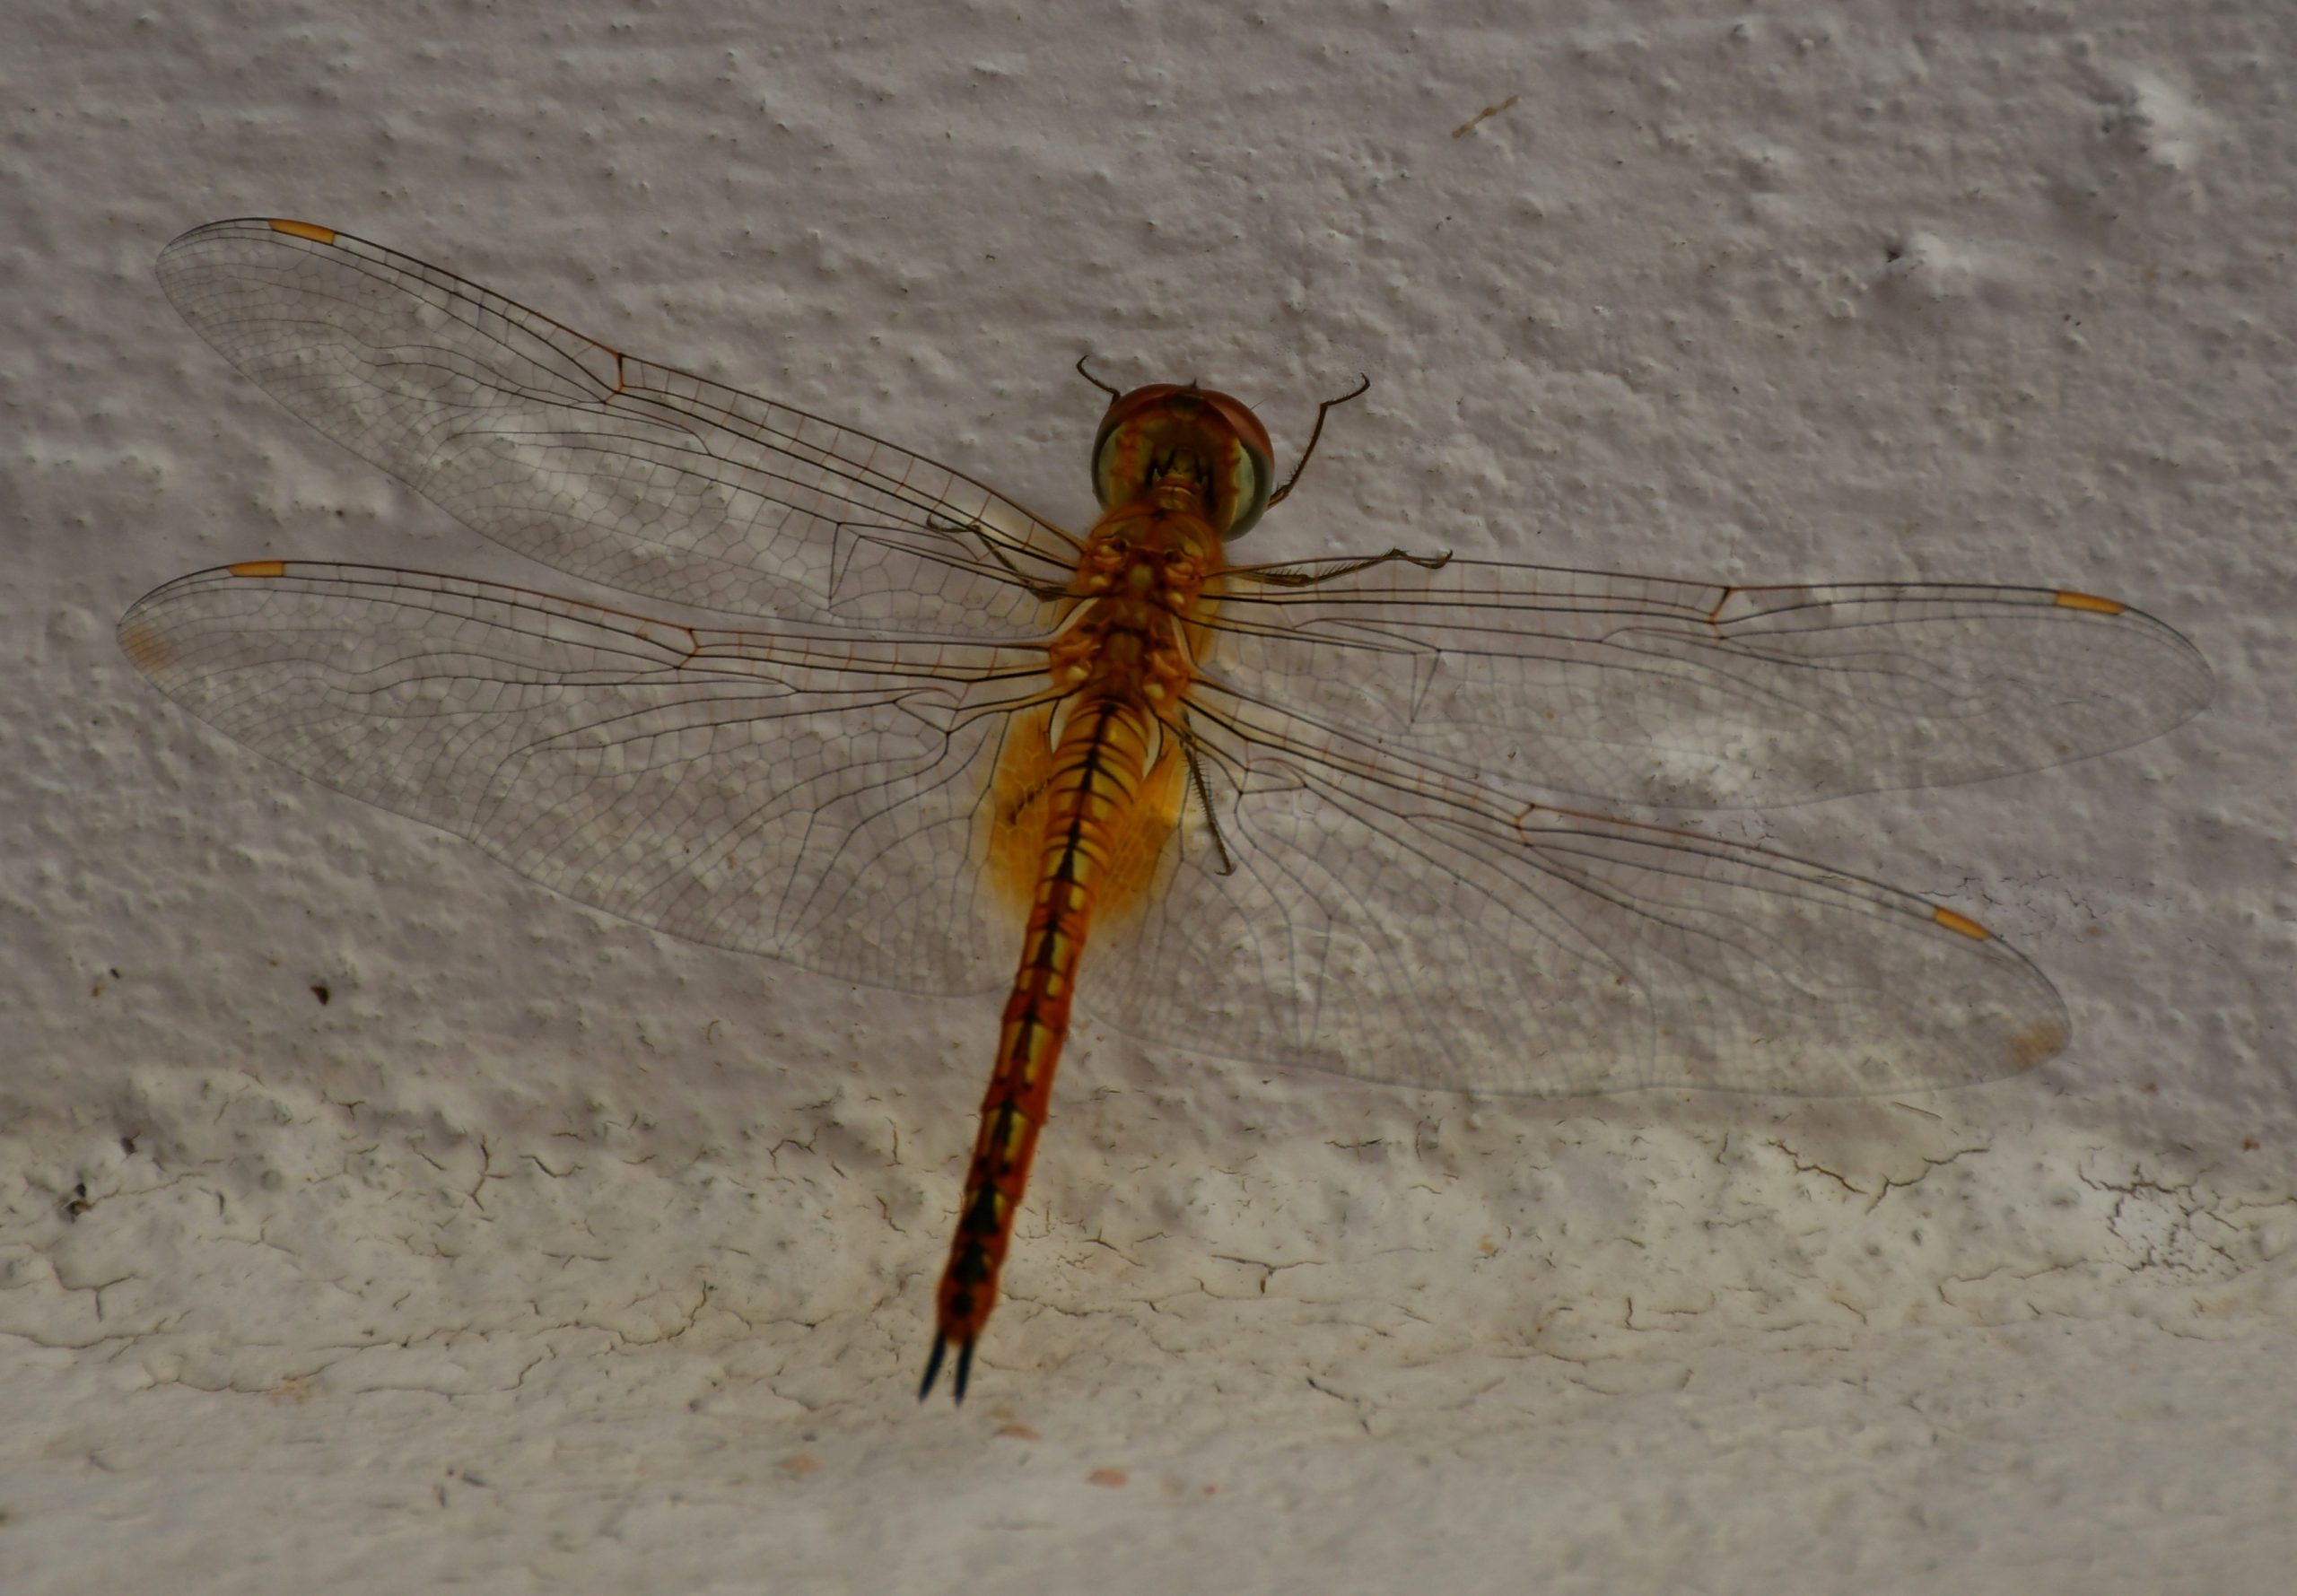 A golden dragonfly